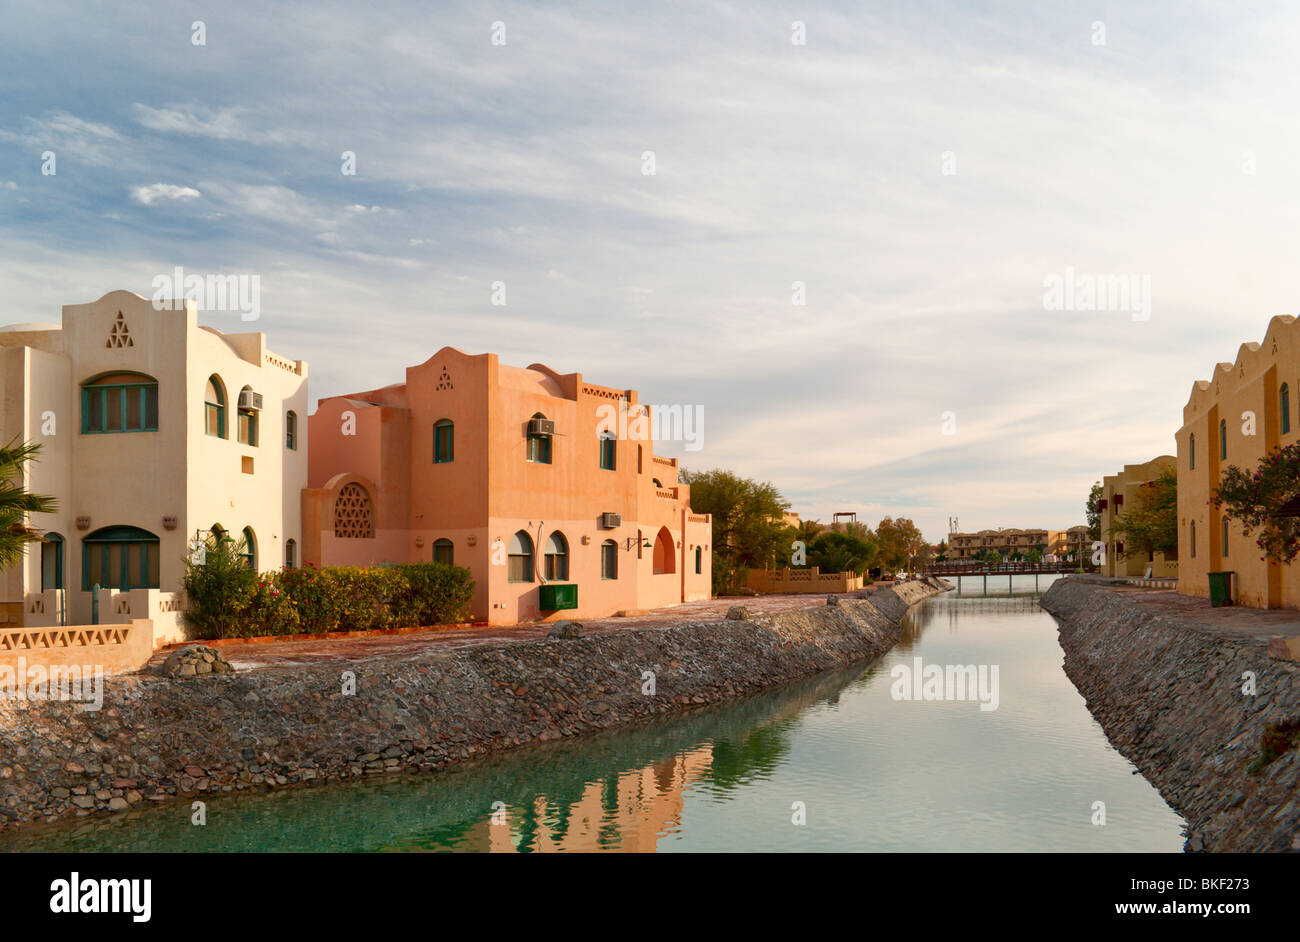 Canal in el-Gouna, Egypt Stock Photo